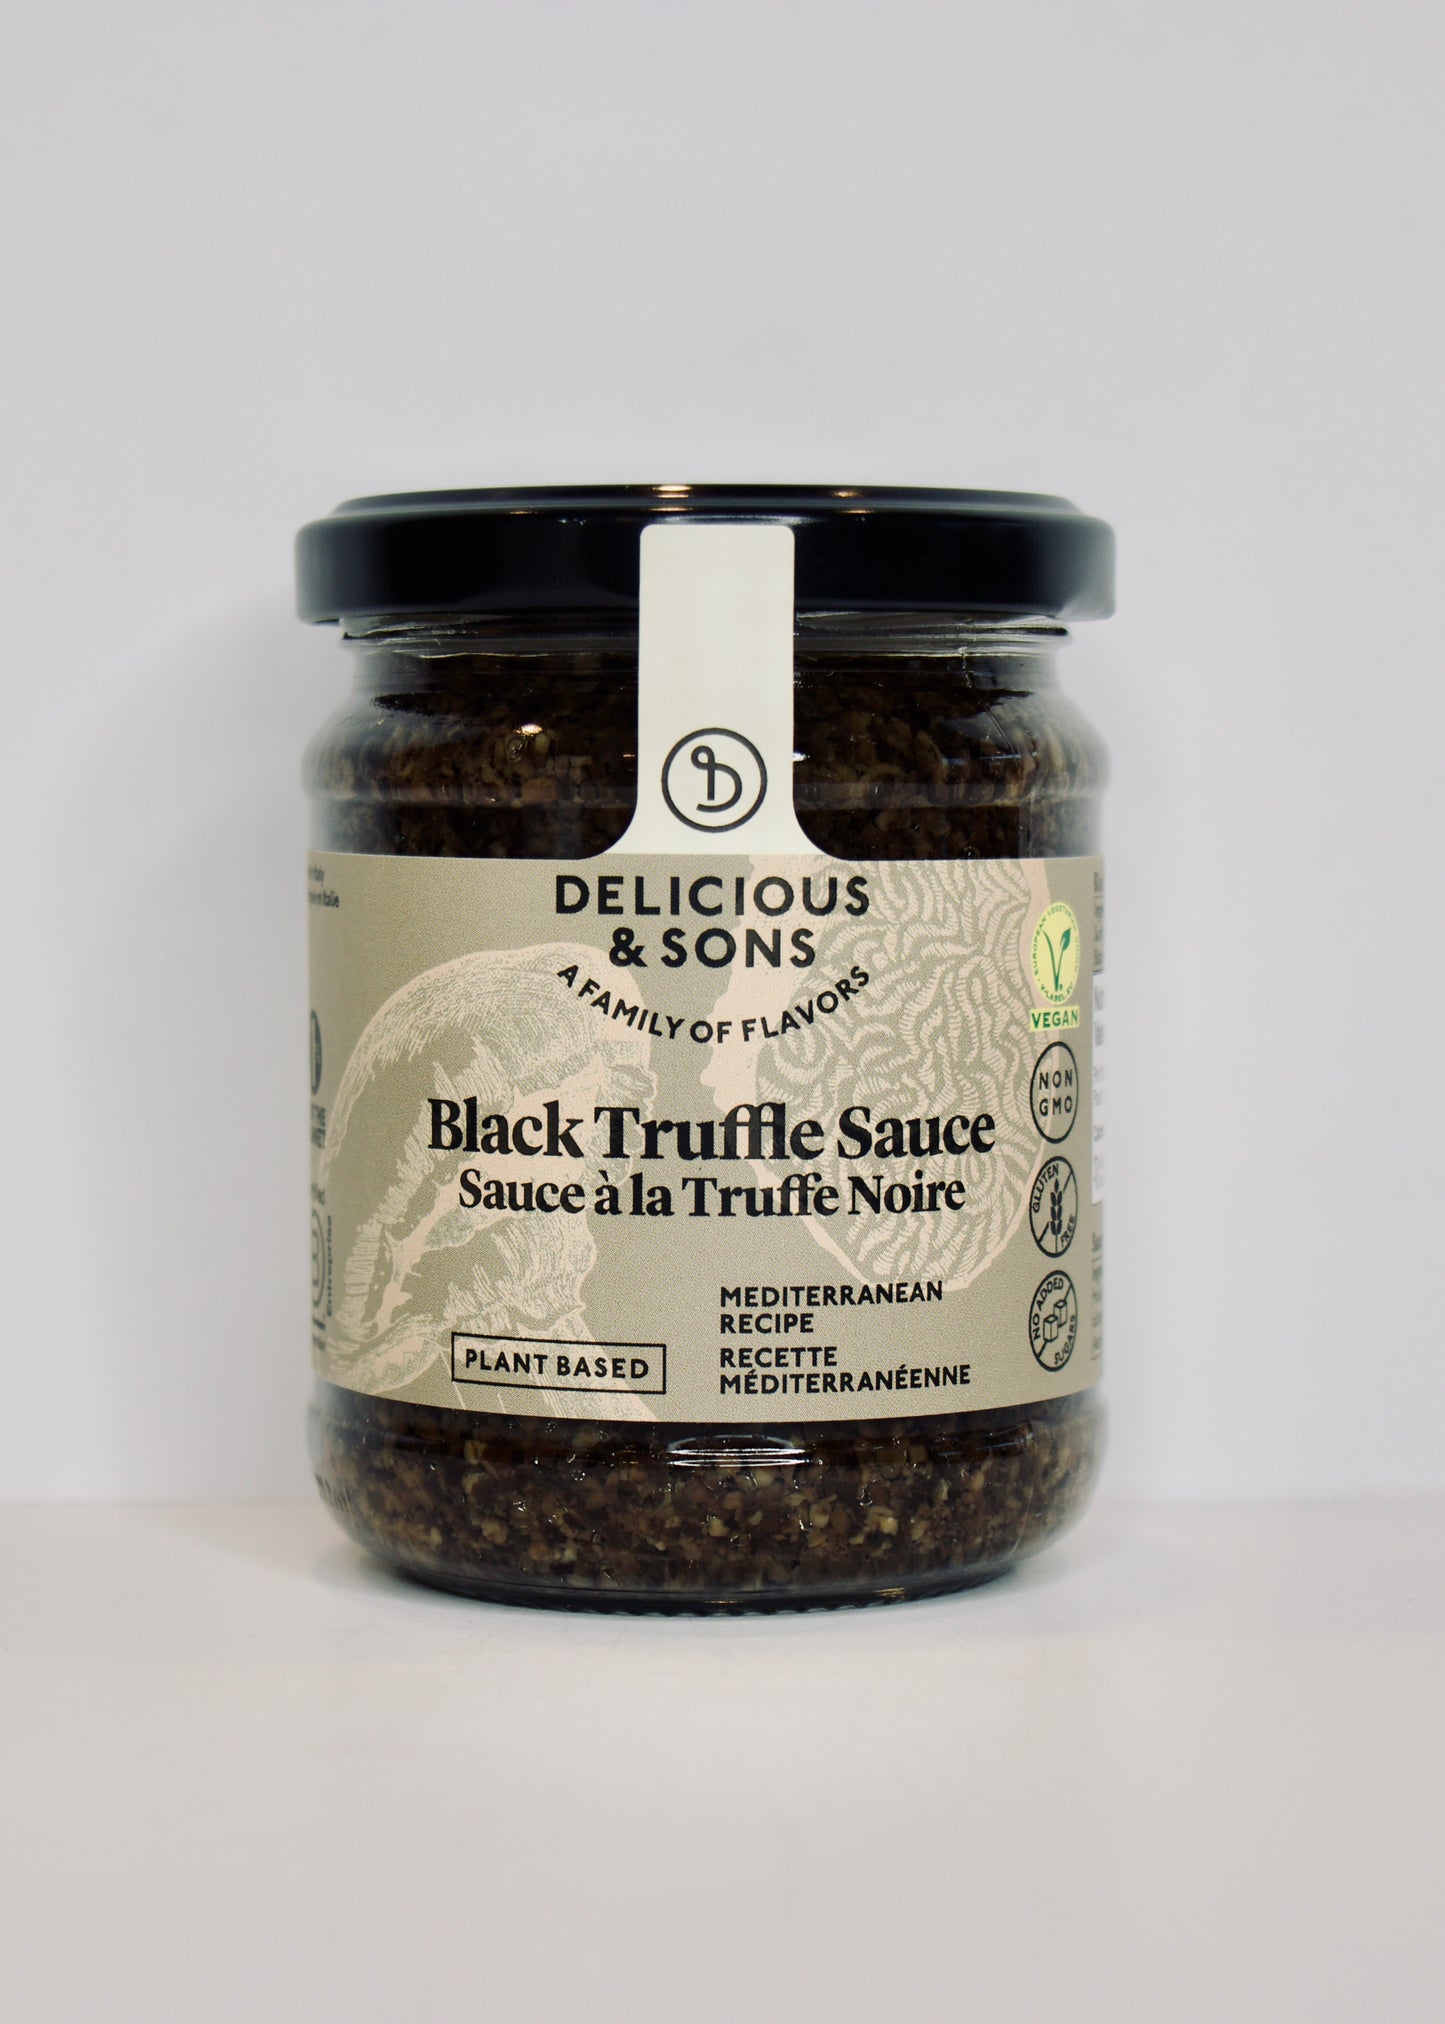 Delicious & Sons Black Truffle Sauce 6.35 oz